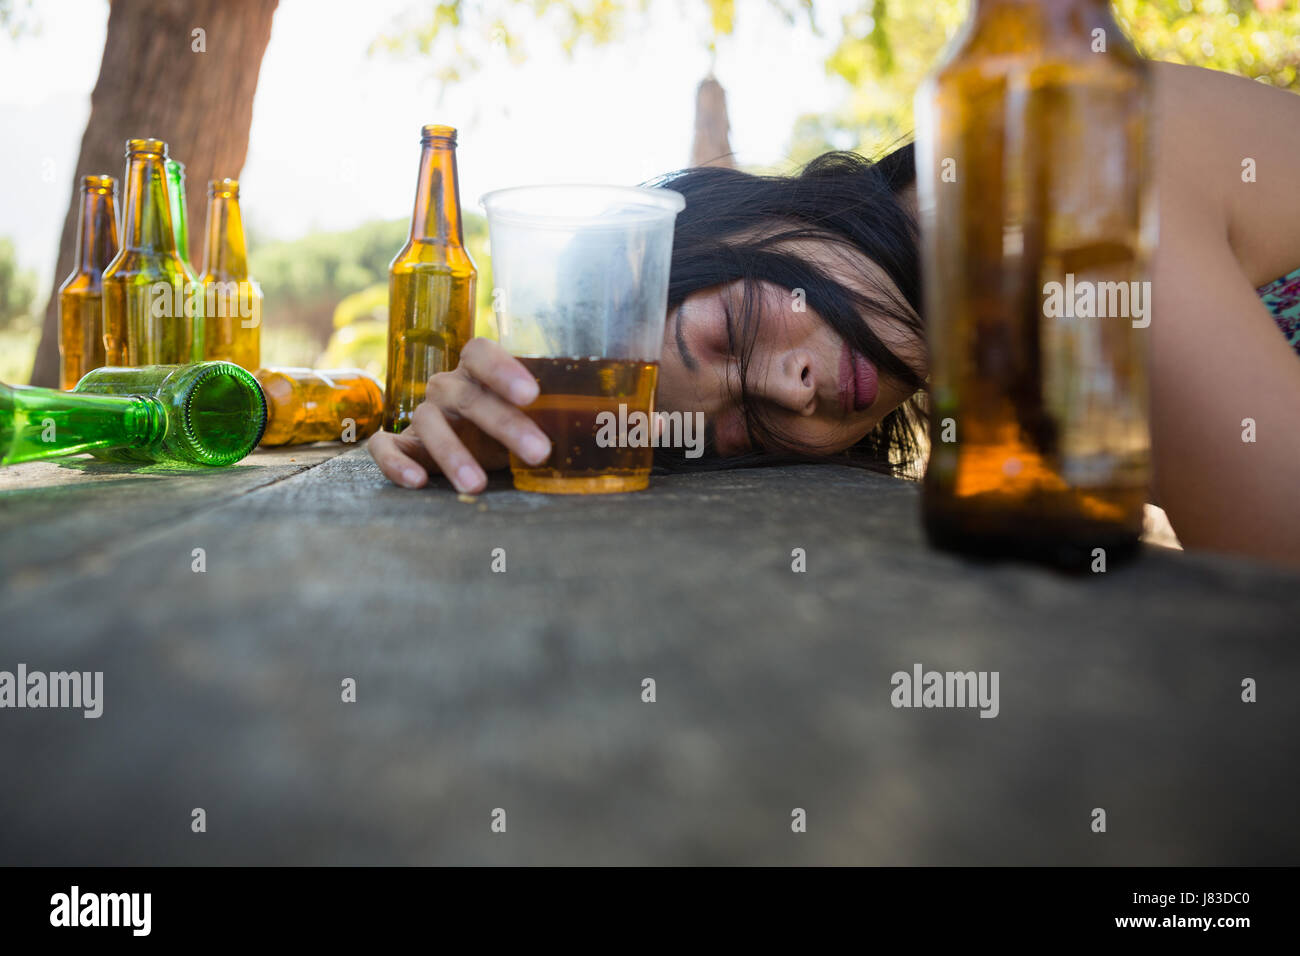 Betrunkene frau -Fotos und -Bildmaterial in hoher Auflösung – Alamy